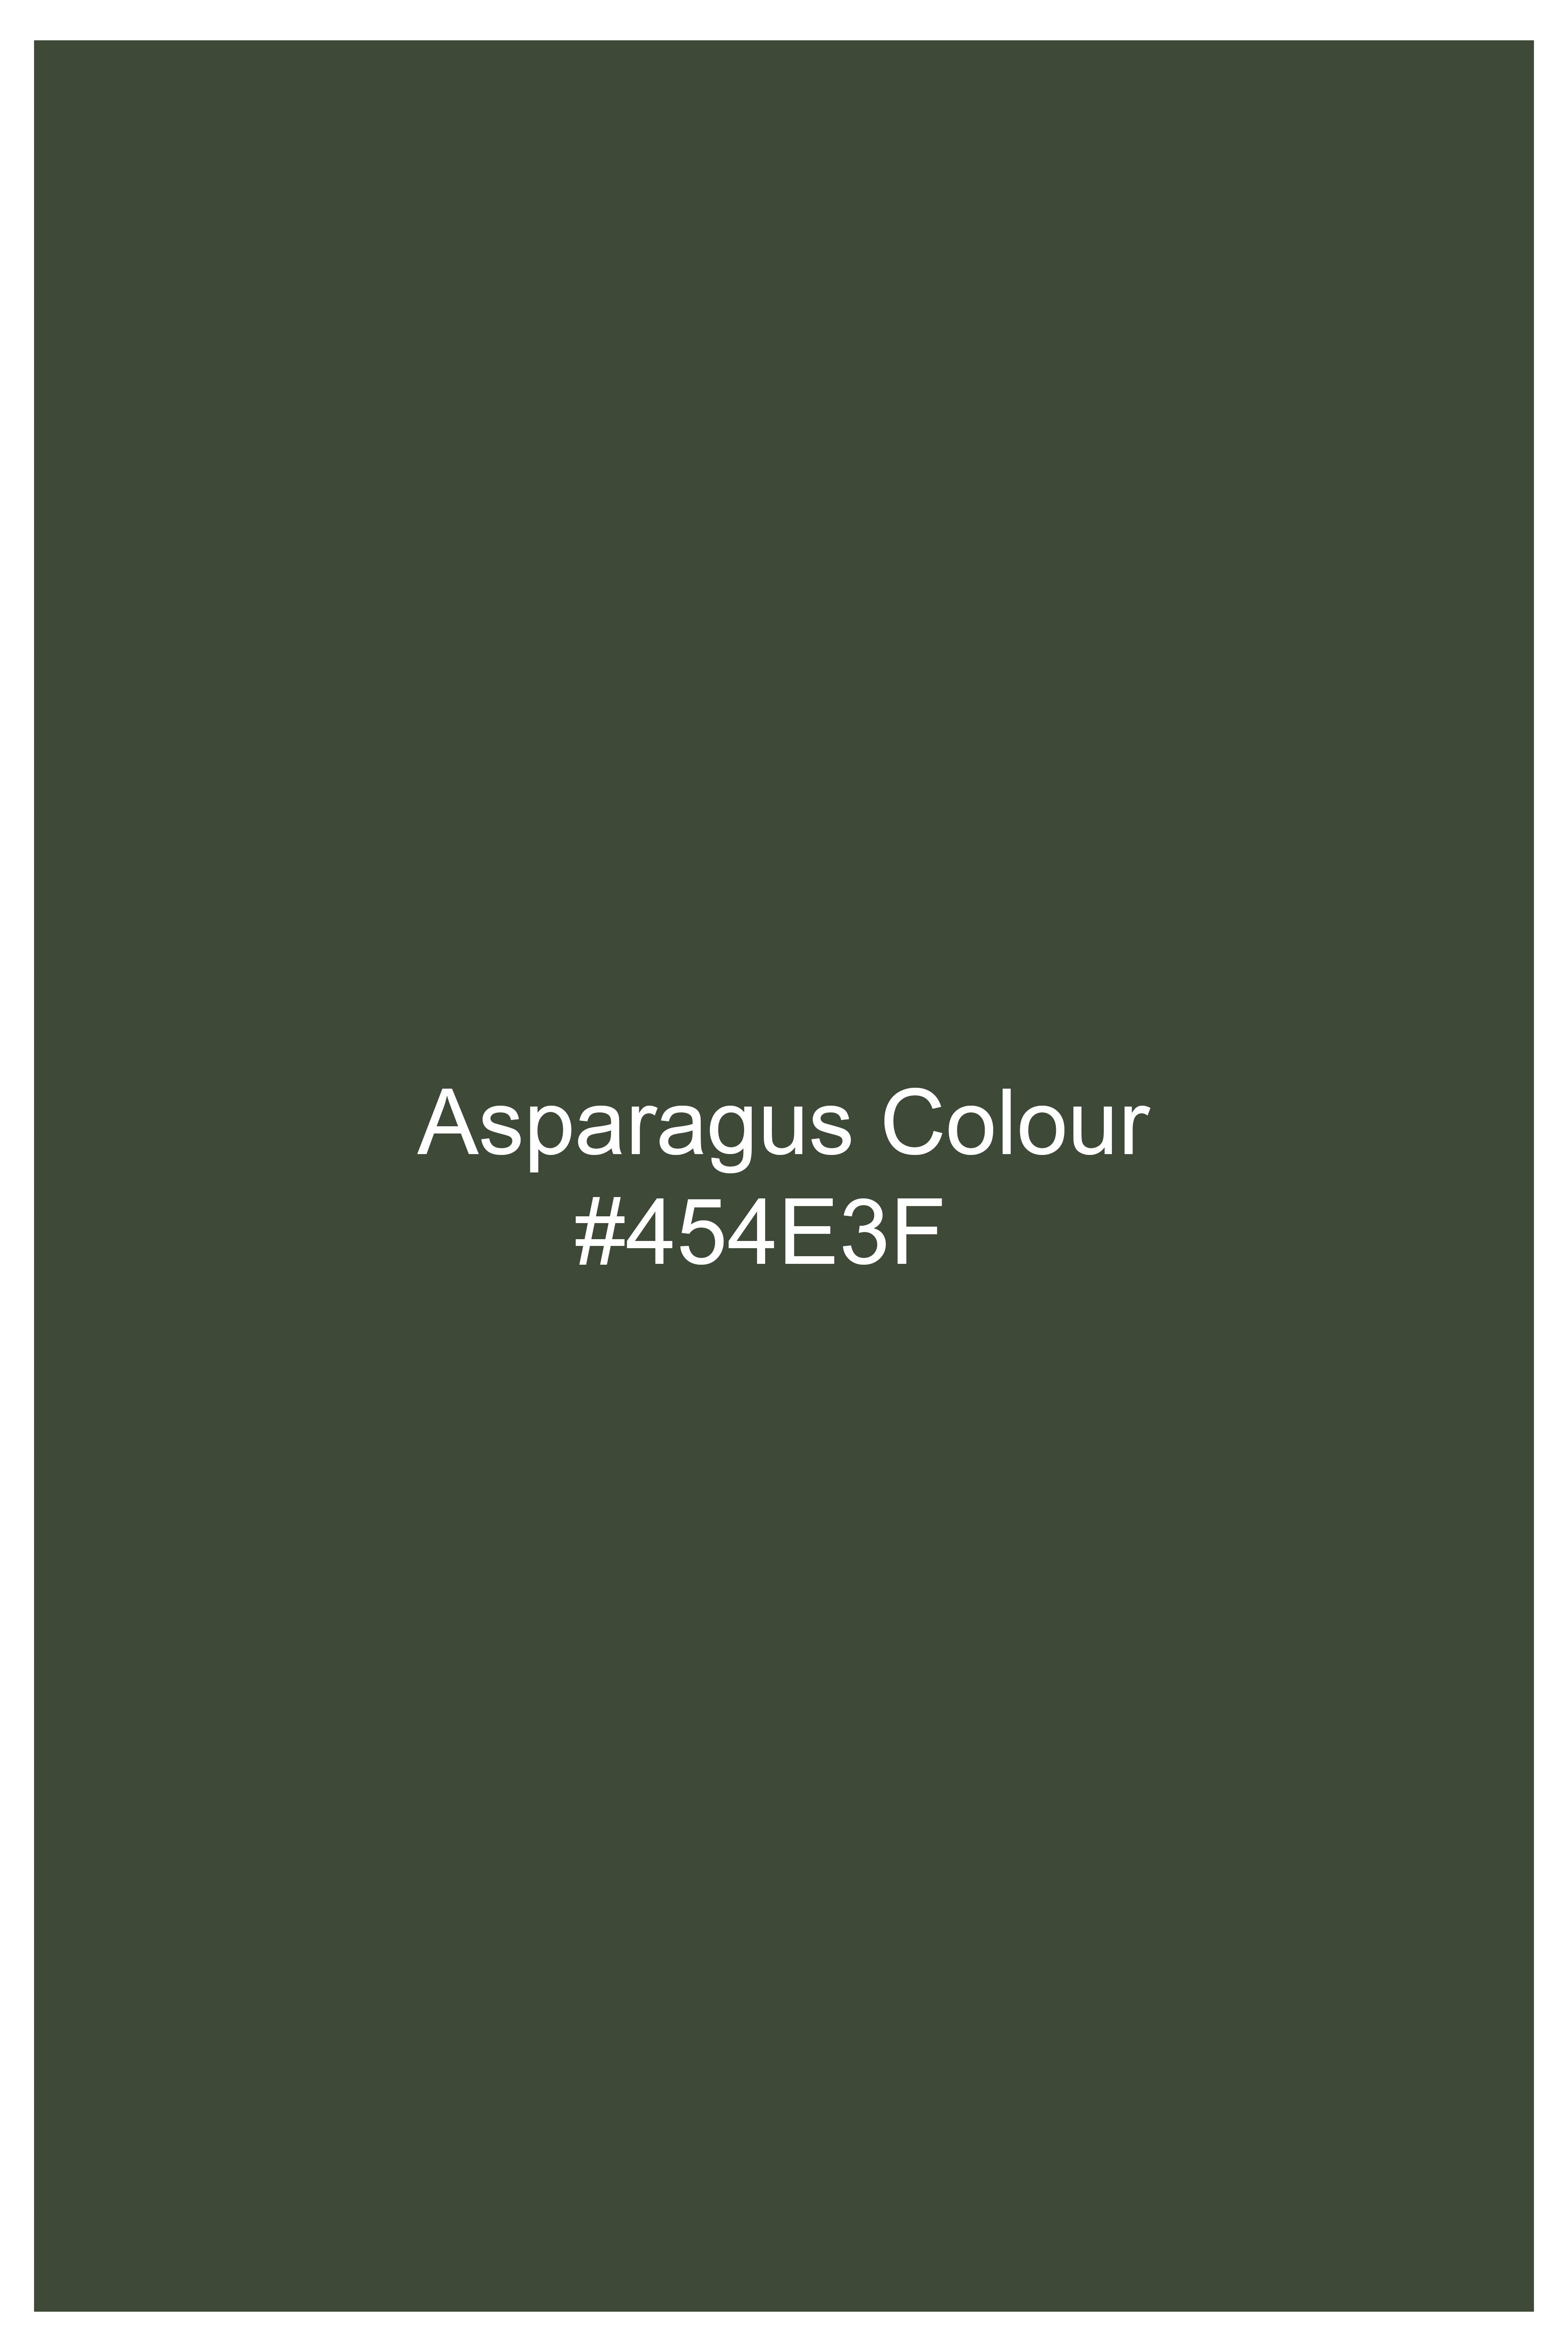 Asparagus Green Dobby Textured Premium Giza Cotton Shirt